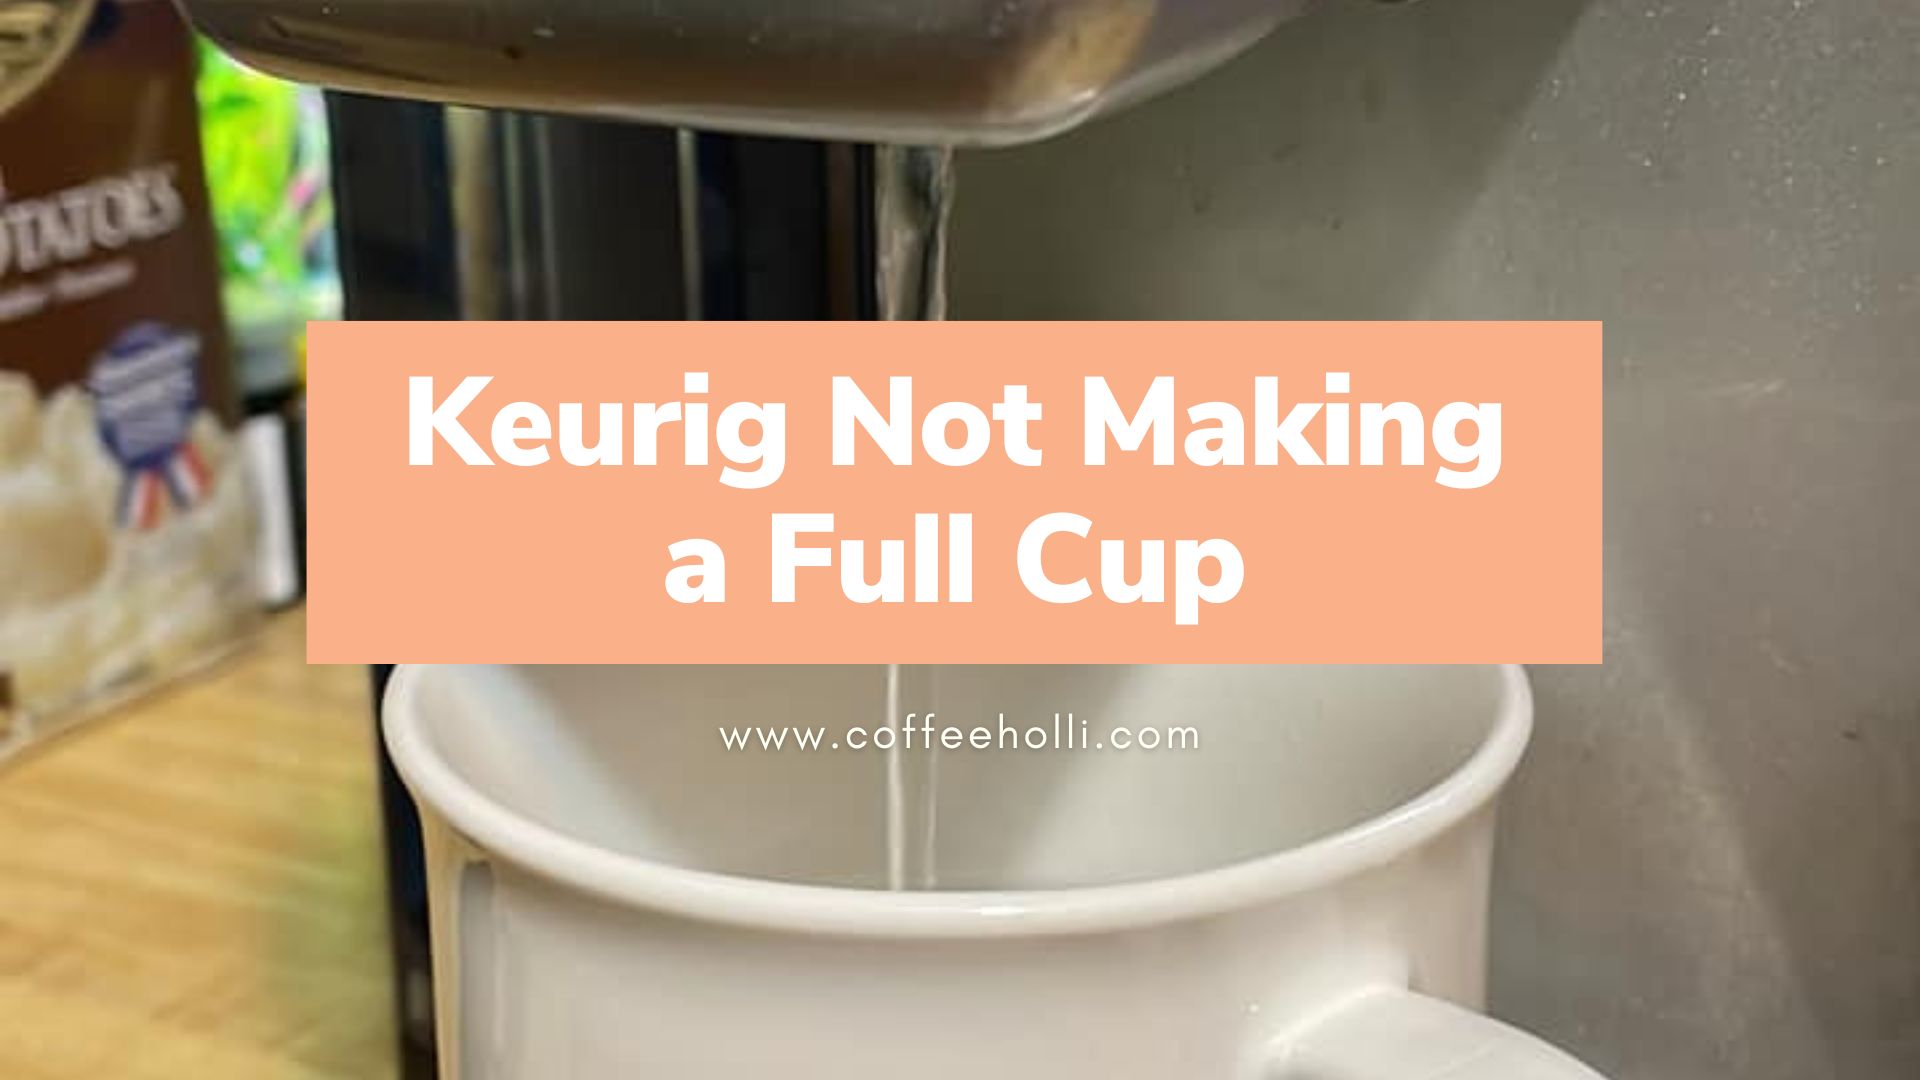 Keurig Not Making a Full Cup